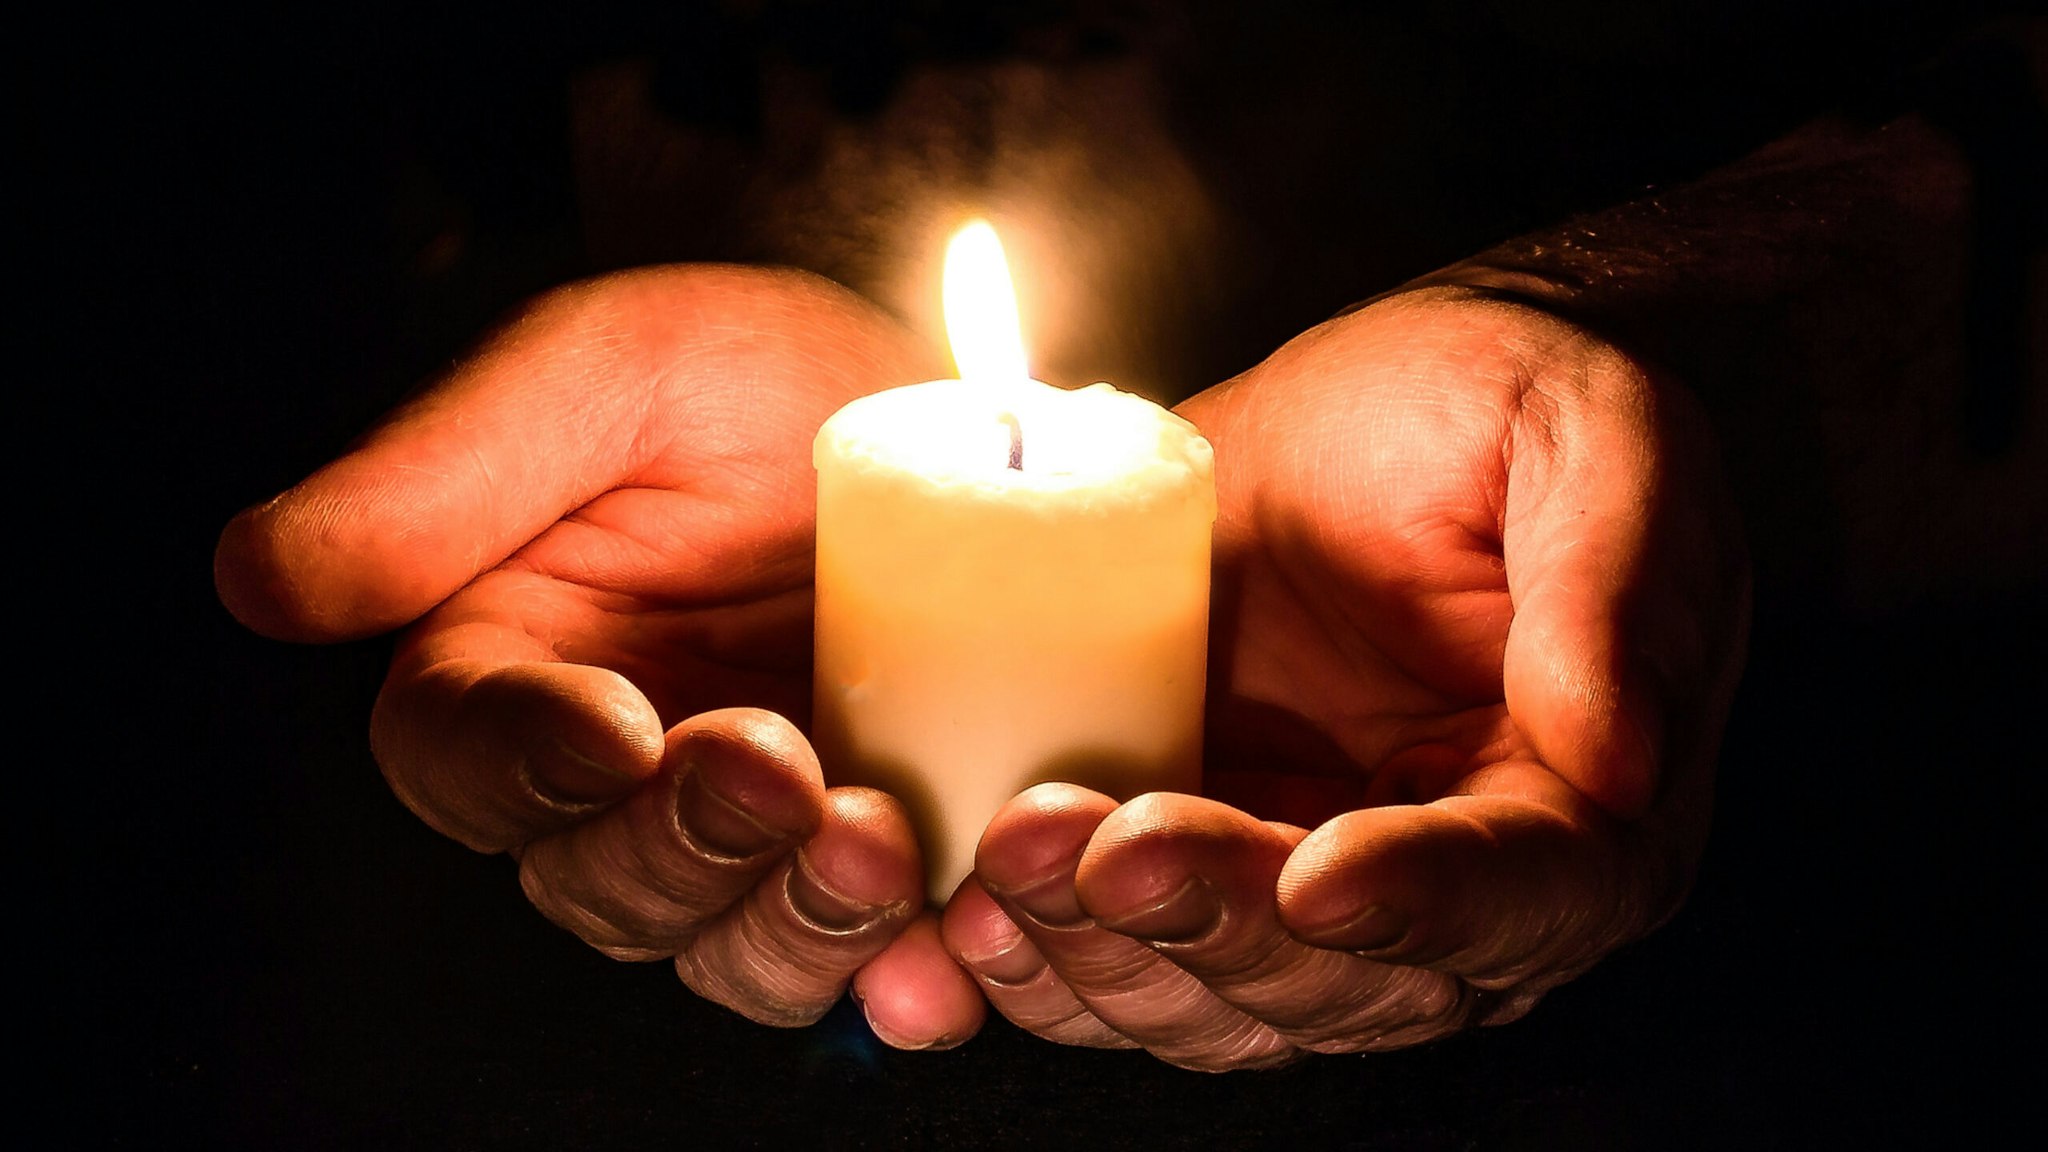 Cropped Hands Holding Illuminated Candle Against Black Background - stock photo.